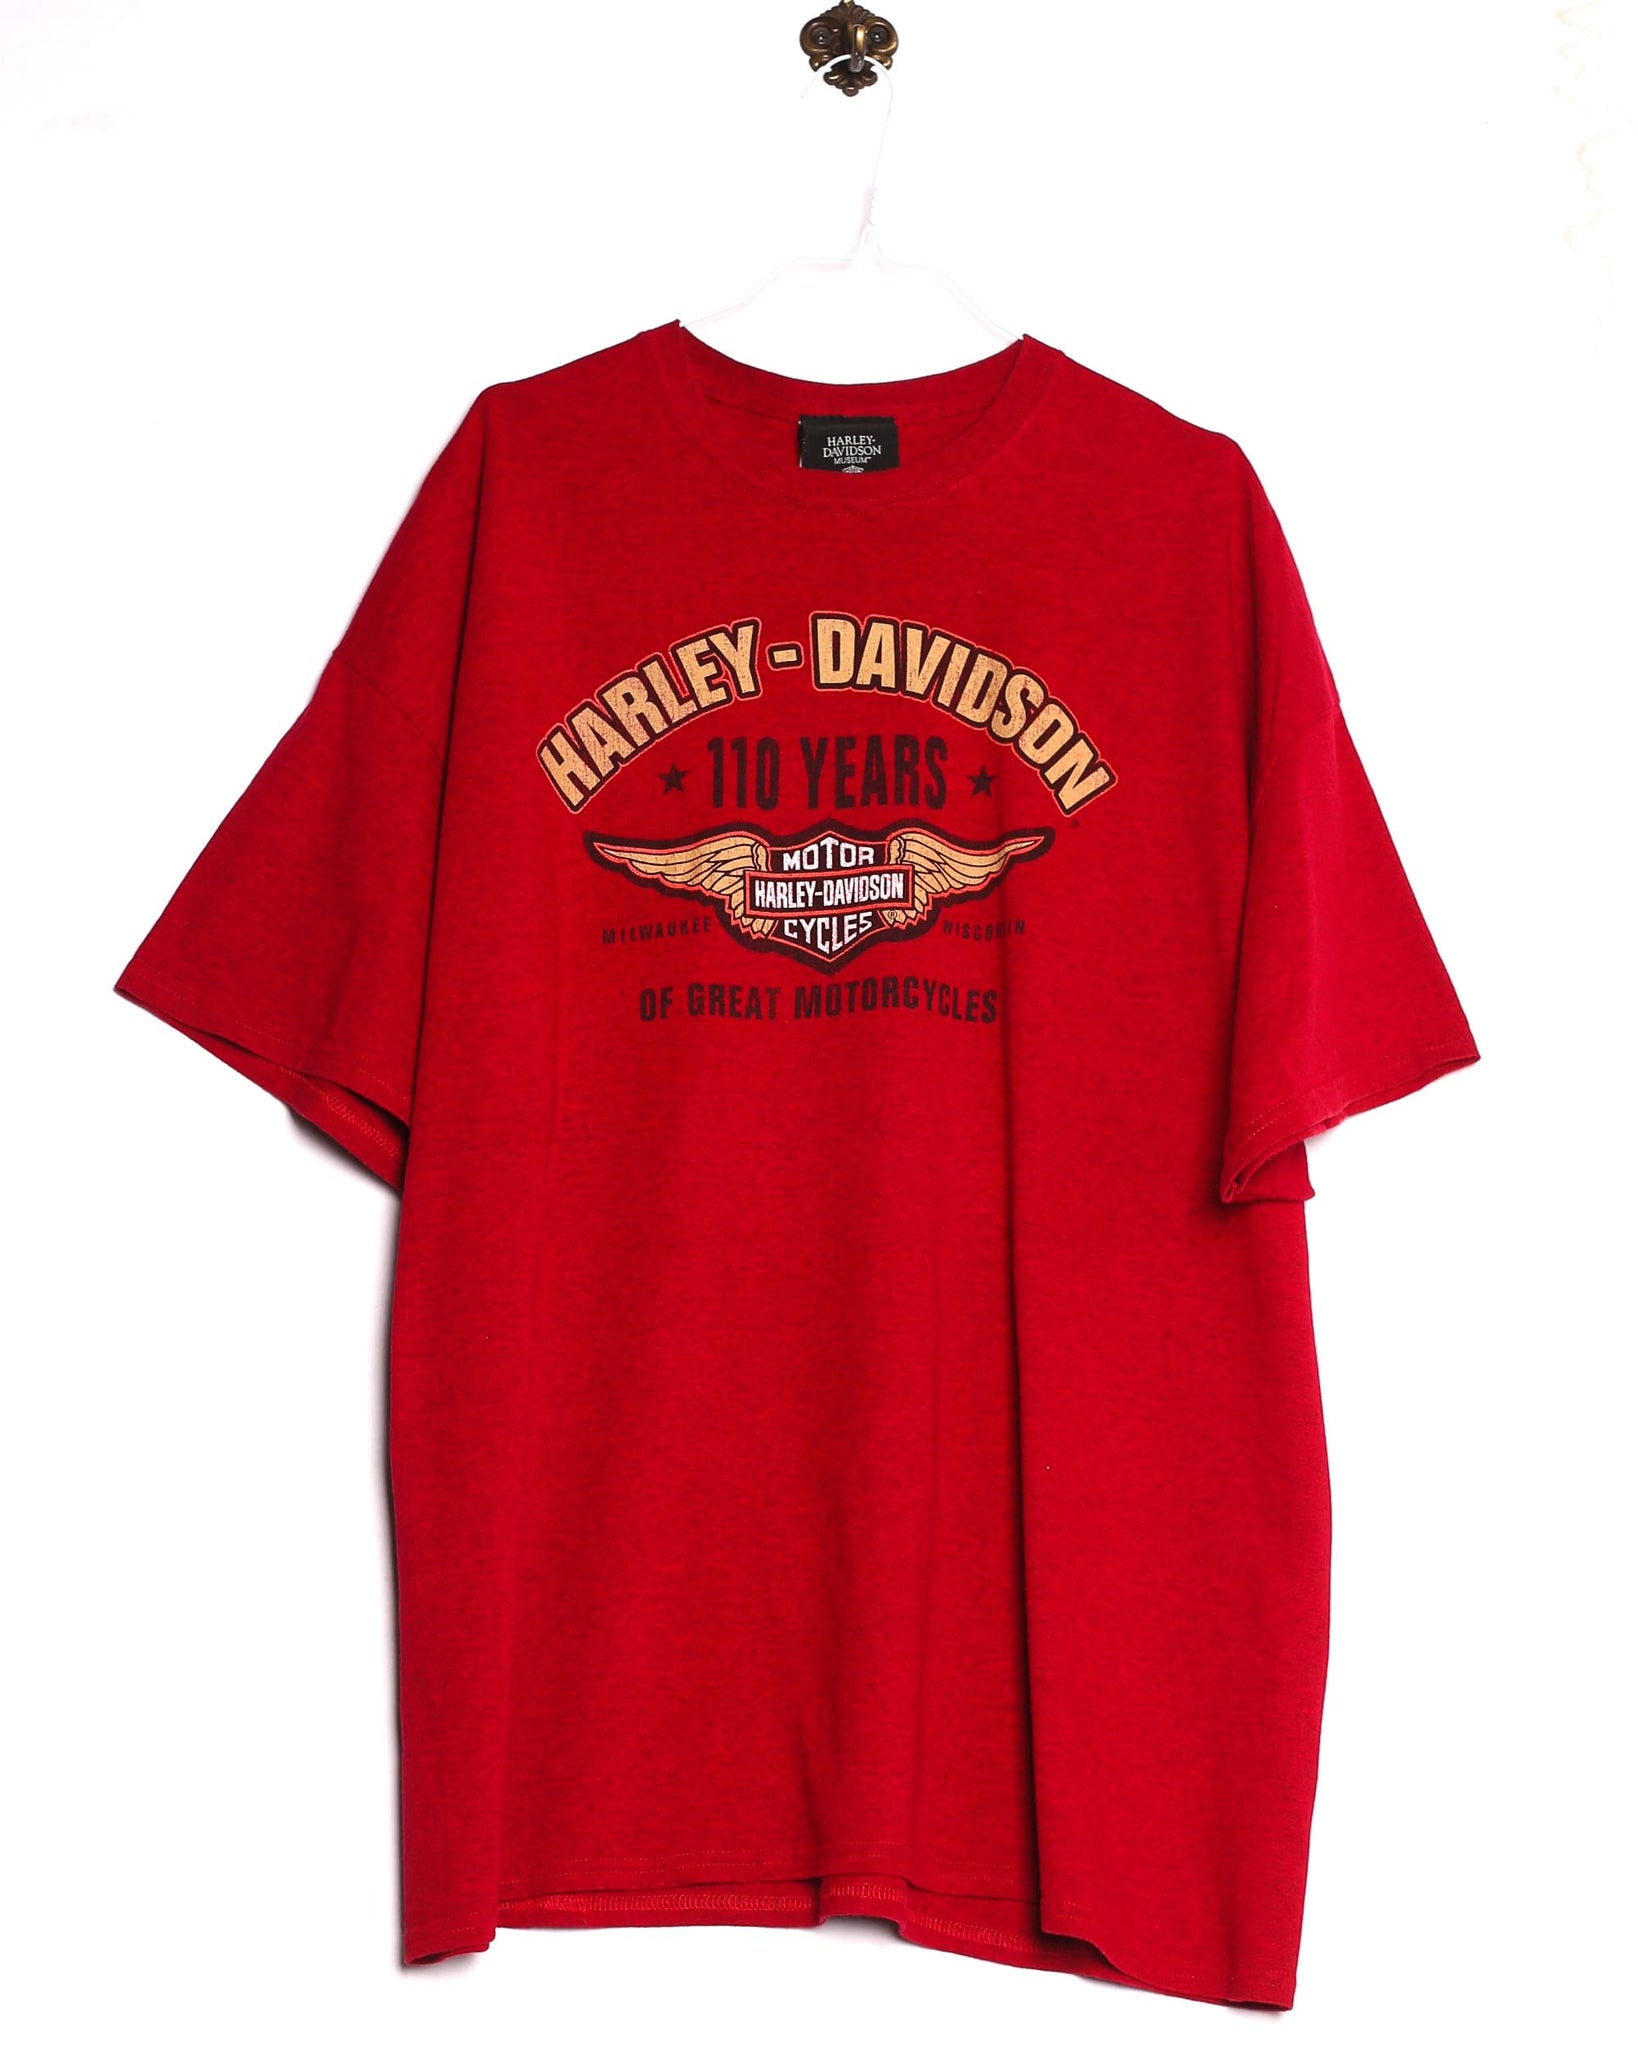 Vintage Harley Davidson T-Shirt 110 Years Print Rot Vorderseite